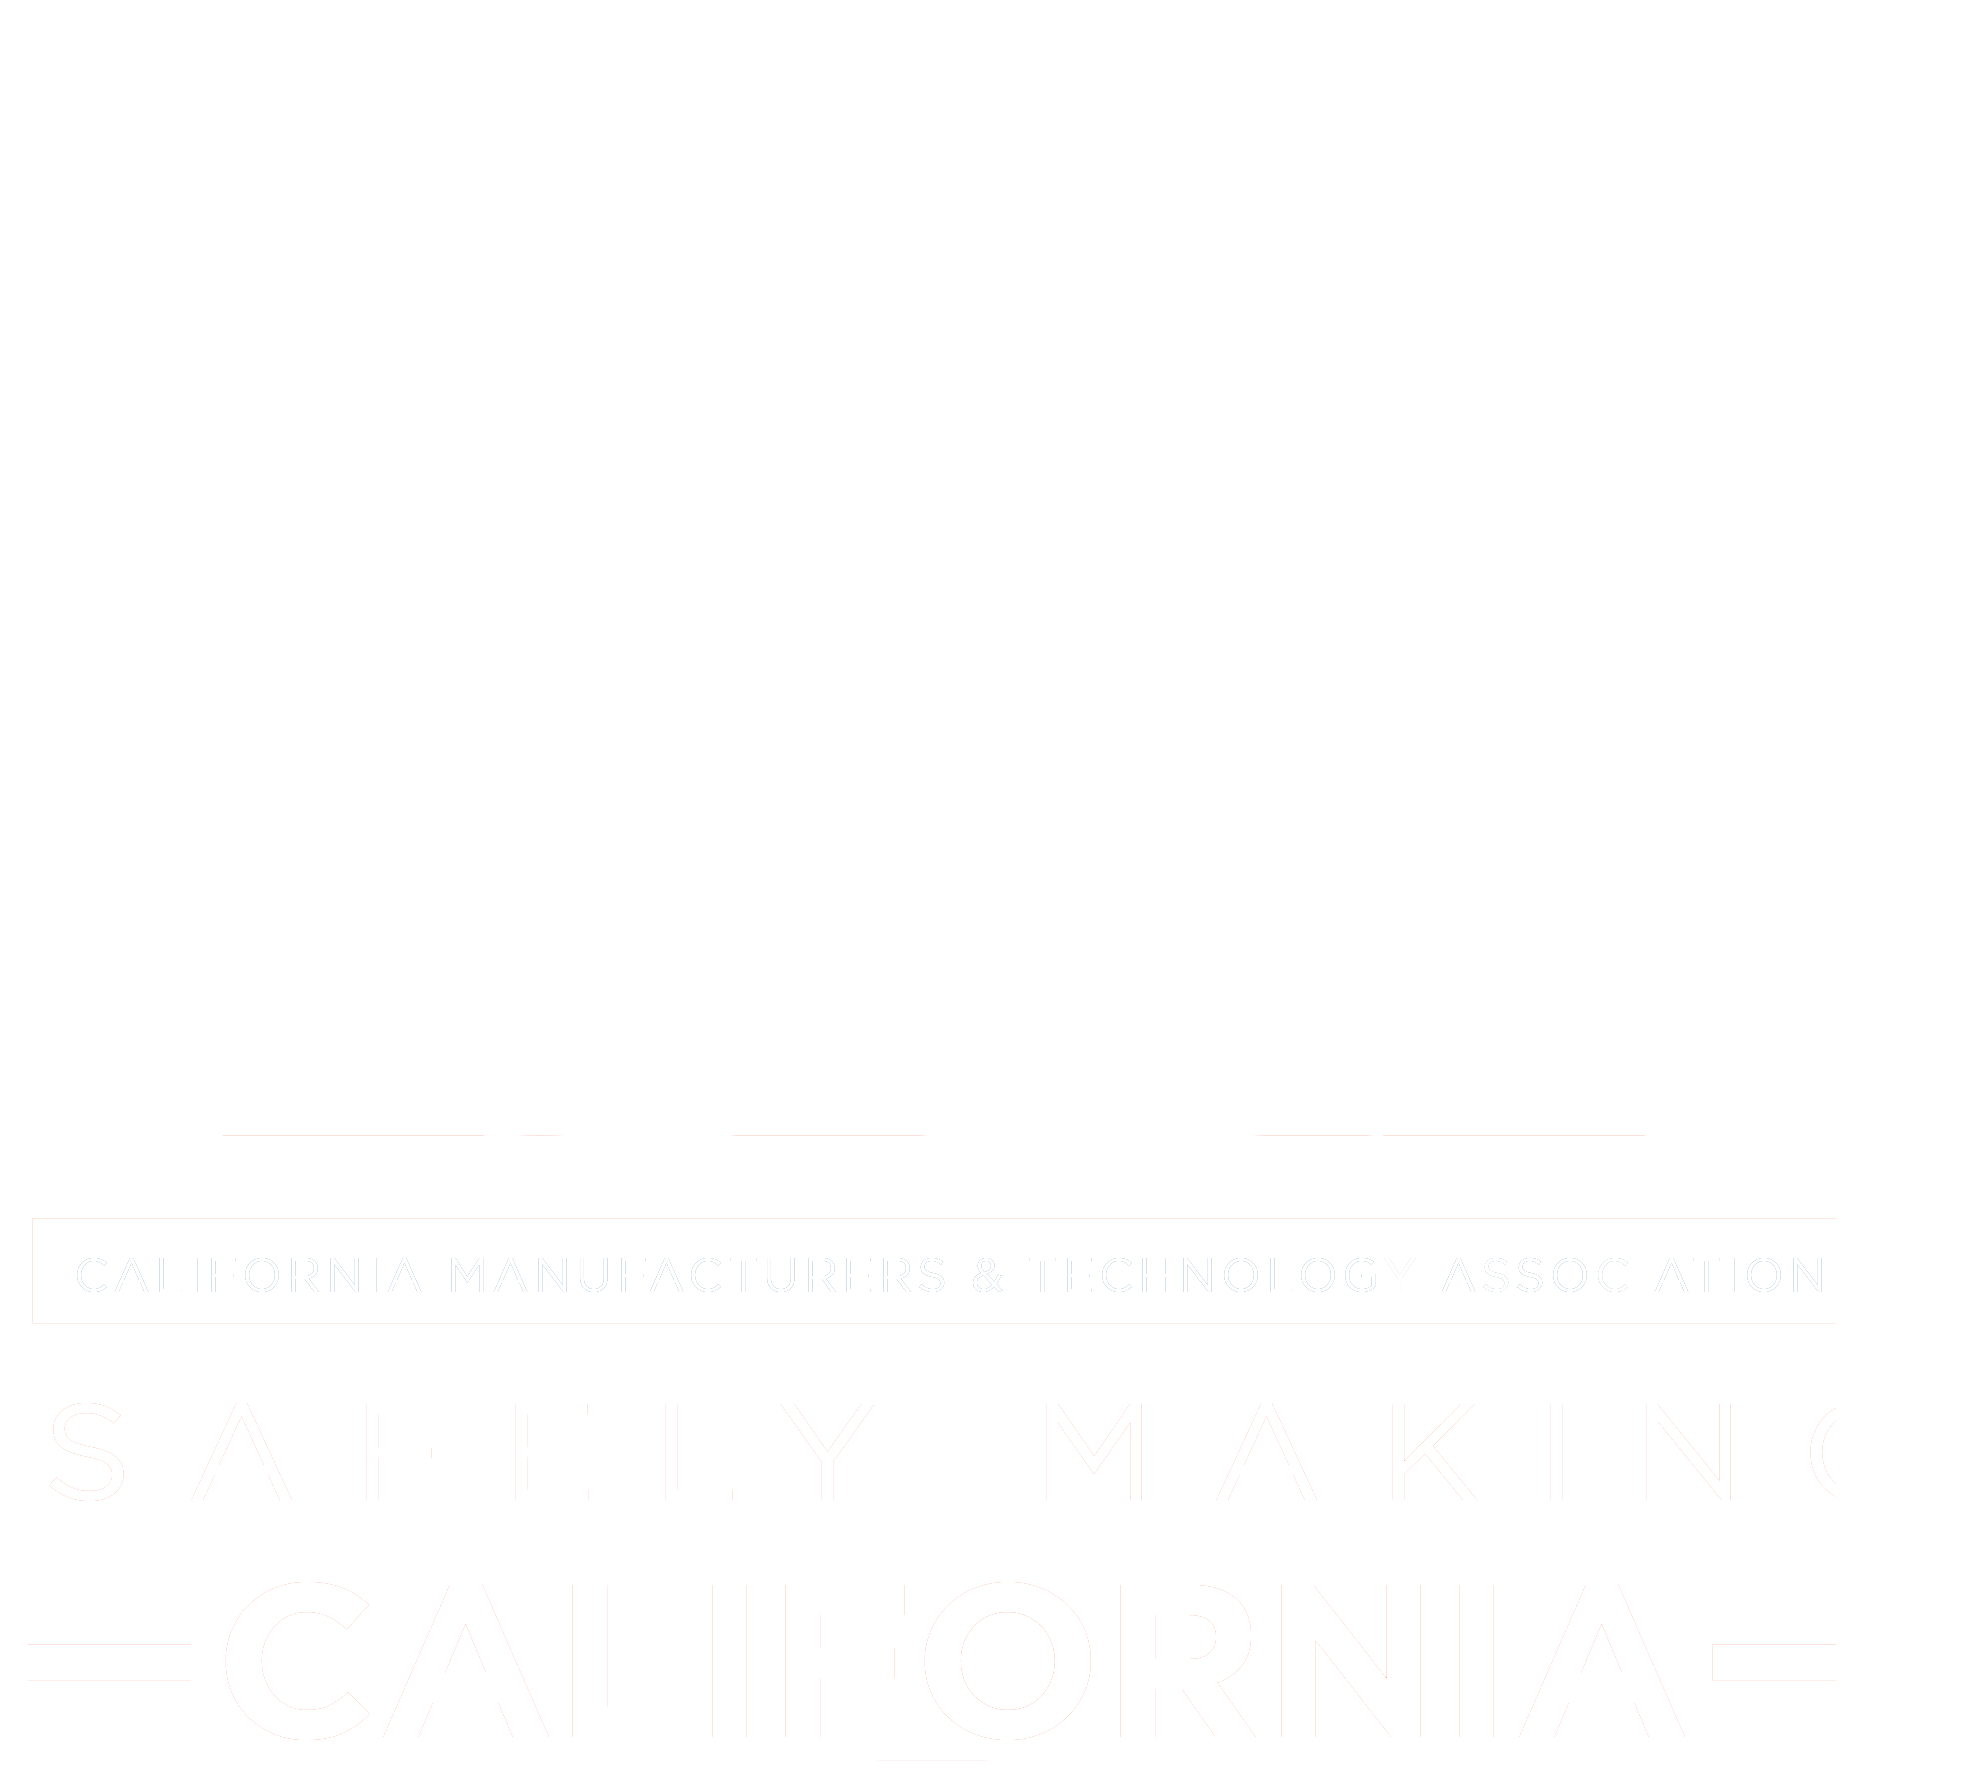 Safely Making CA logo